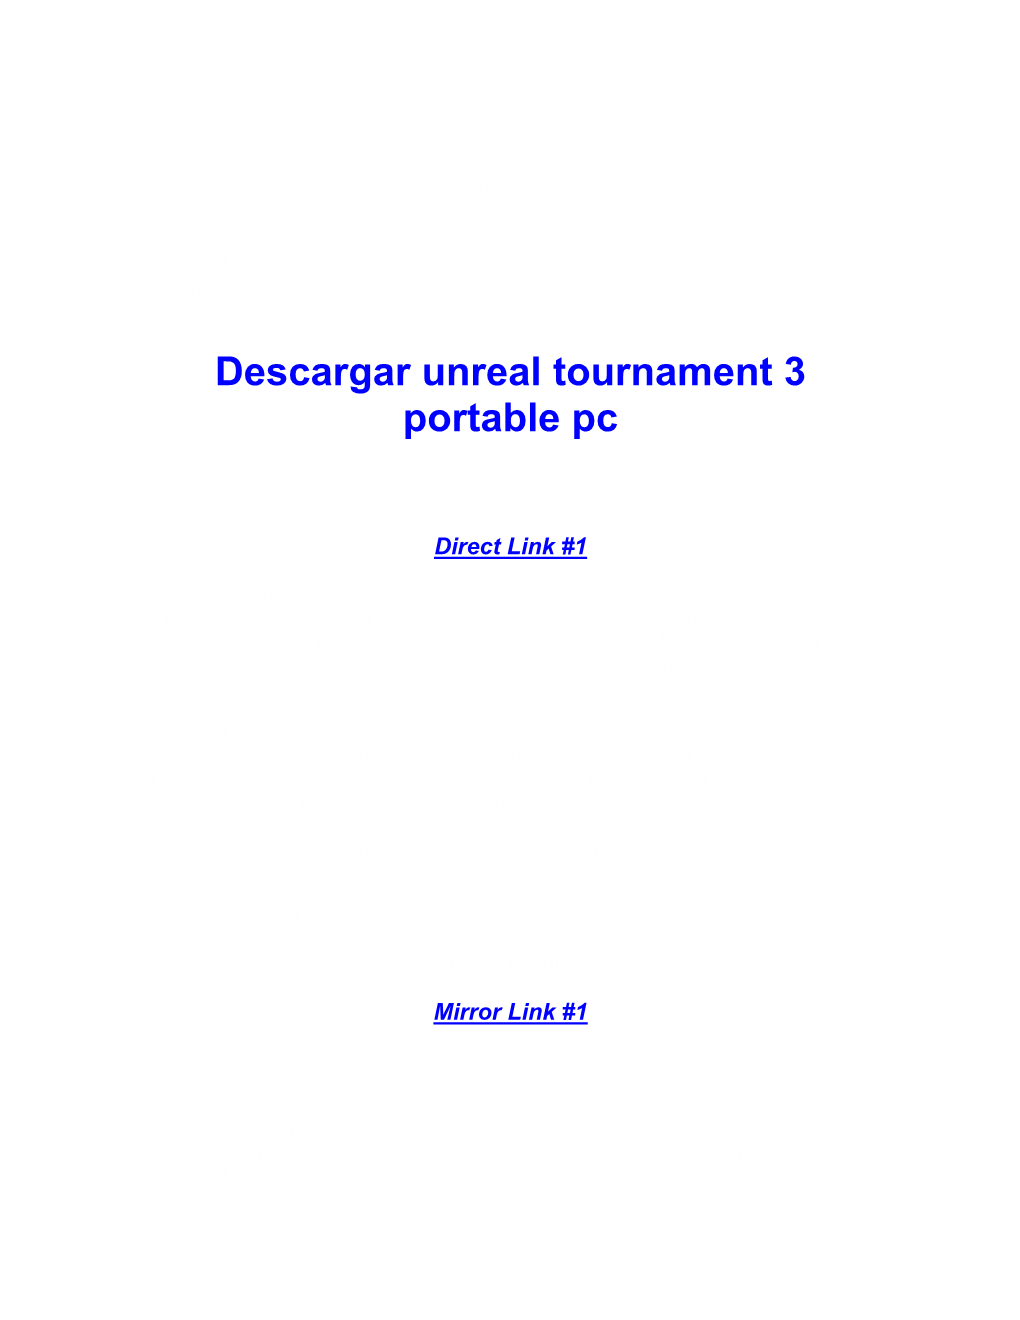 Descargar Unreal Tournament 3 Portable Pc